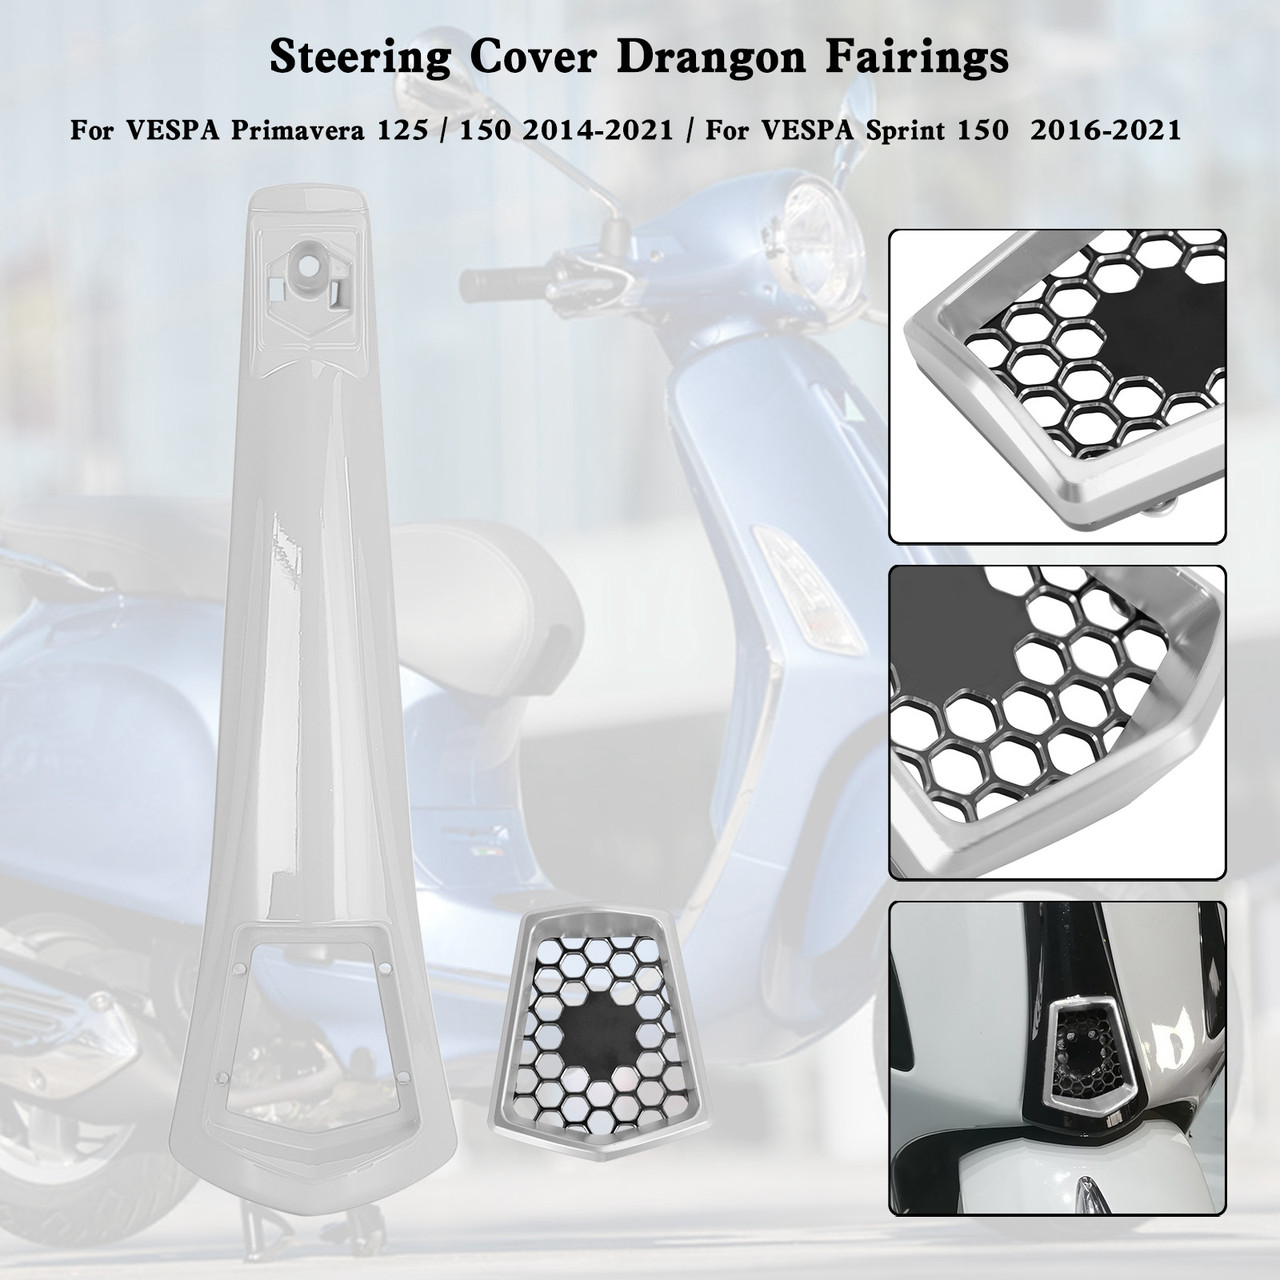 Steering Cover Drangon Fairings For VESPA Sprint Primavera 125/150 2014-2021 WHI